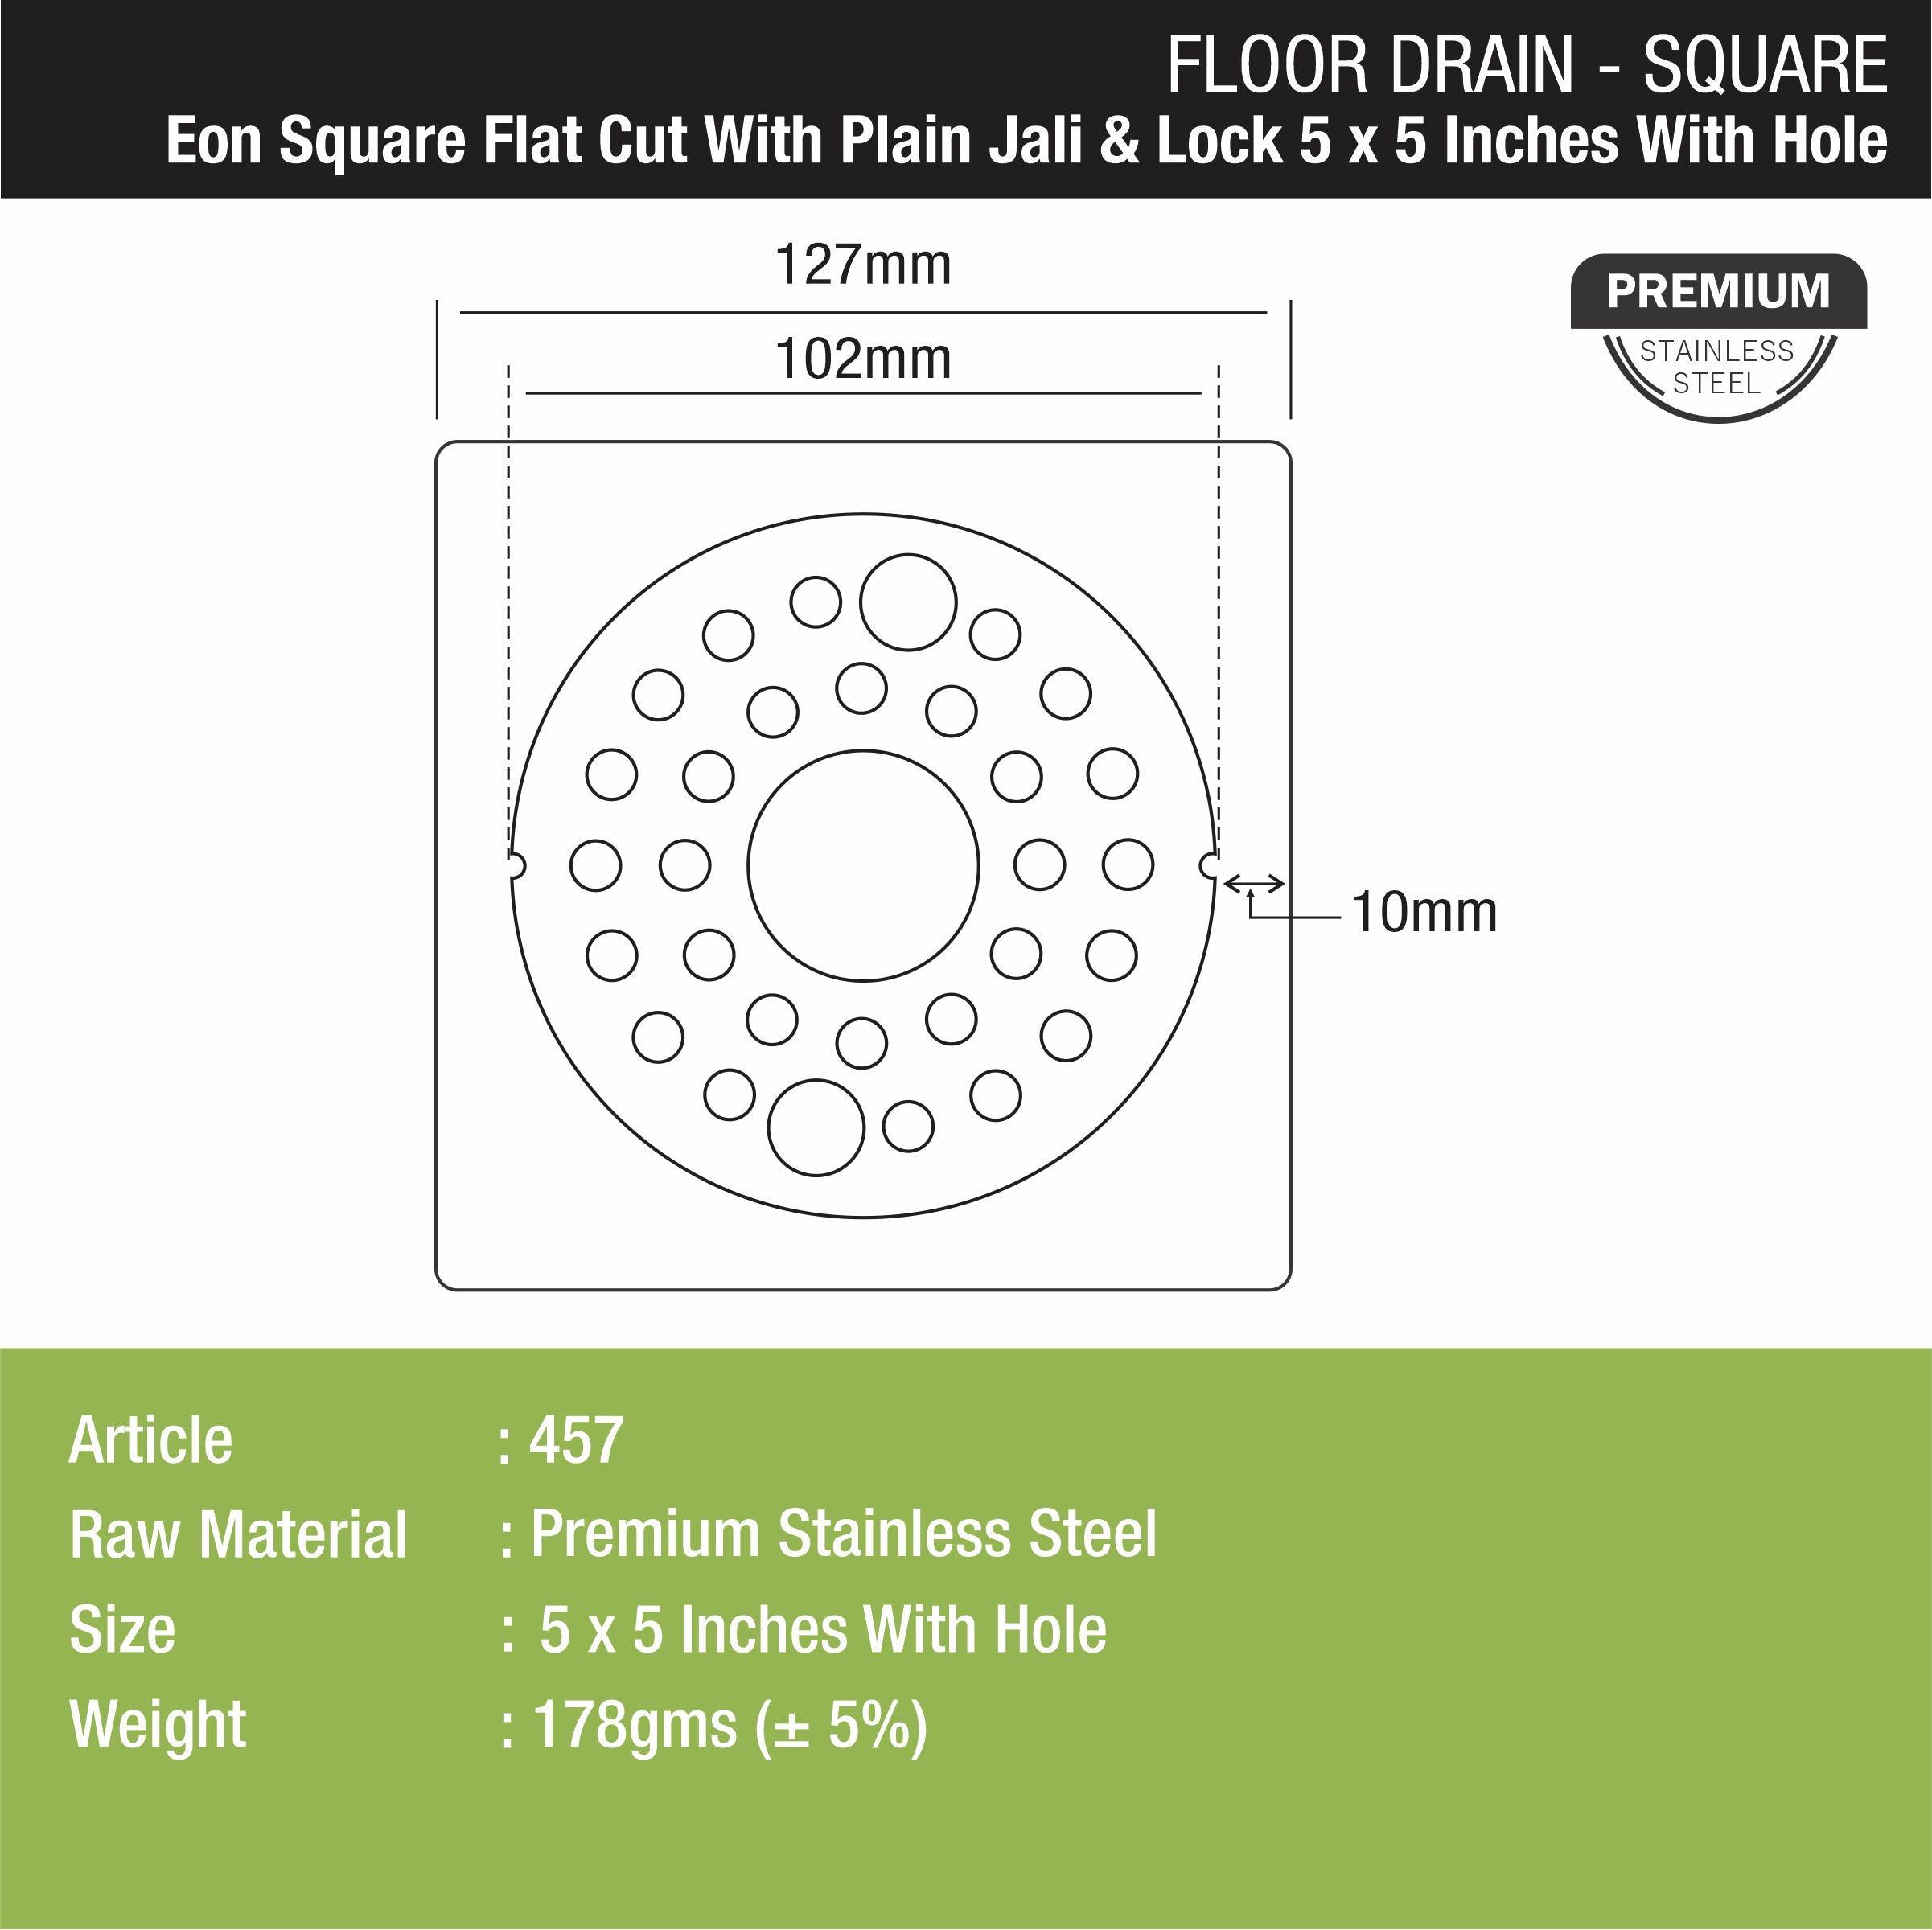 Eon Square Flat Cut Floor Drain with Plain Jali, Lock and Hole (5 x 5 Inches) - LIPKA - Lipka Home